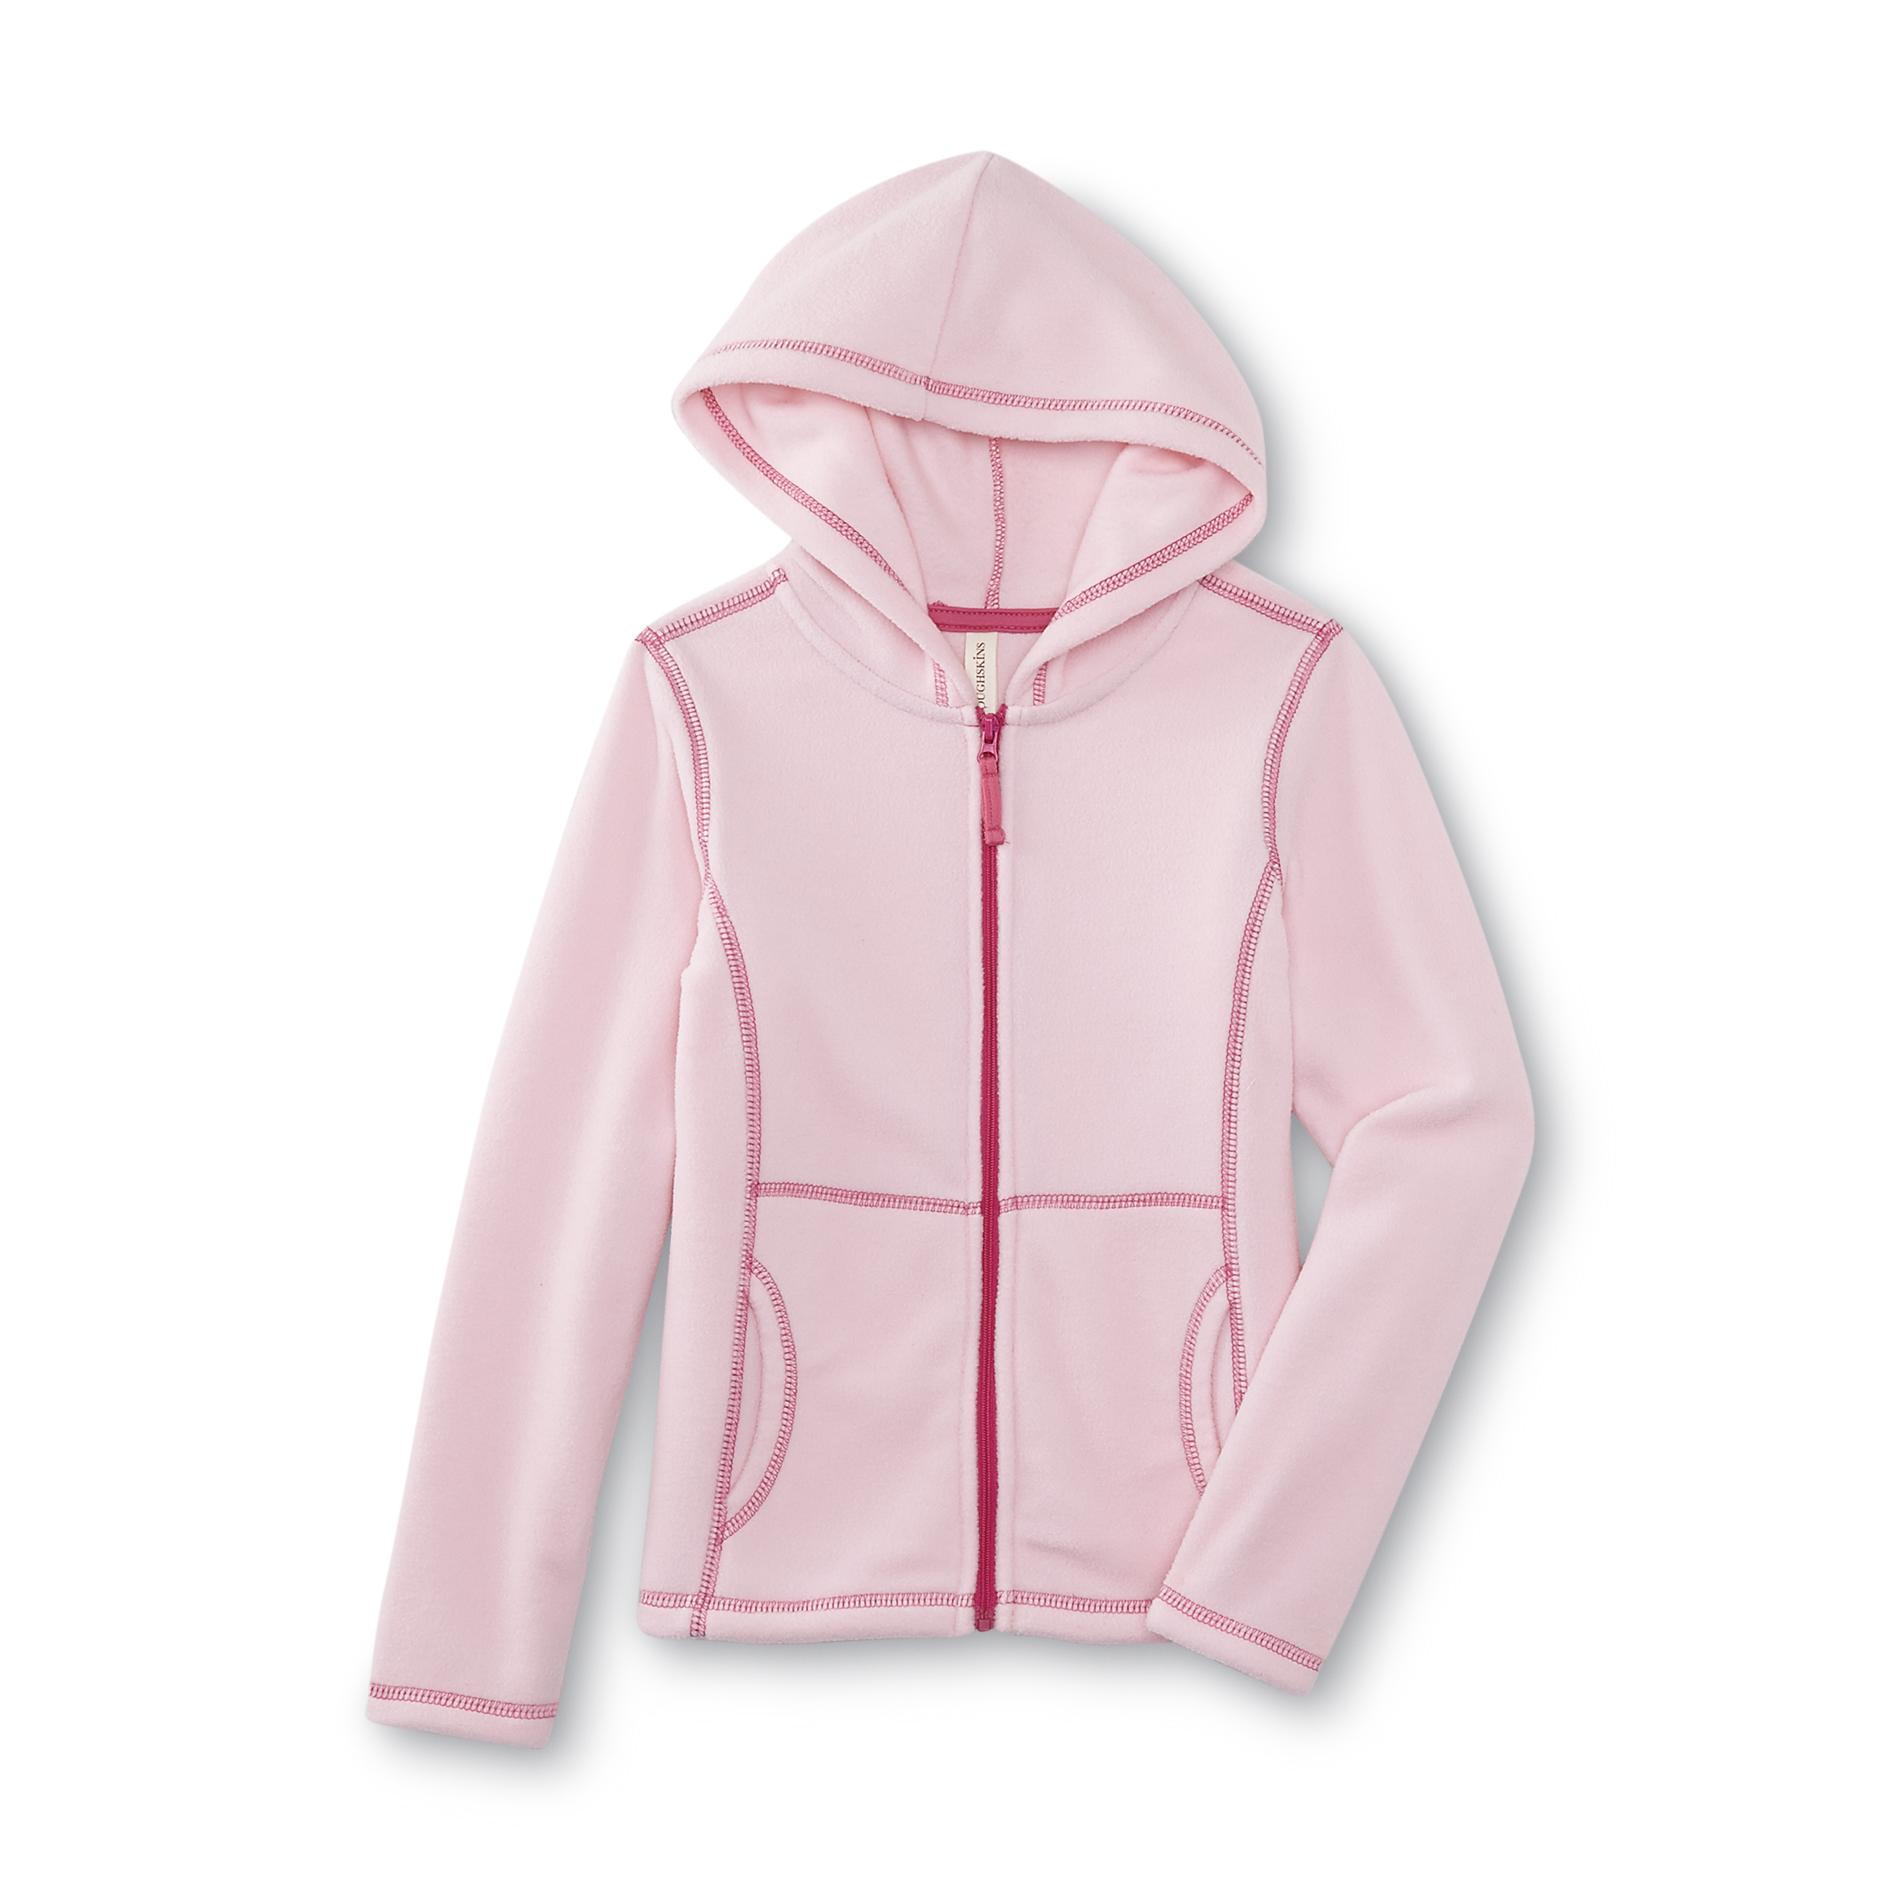 Toughskins Infant & Toddler Girls' Fleece Hoodie Jacket